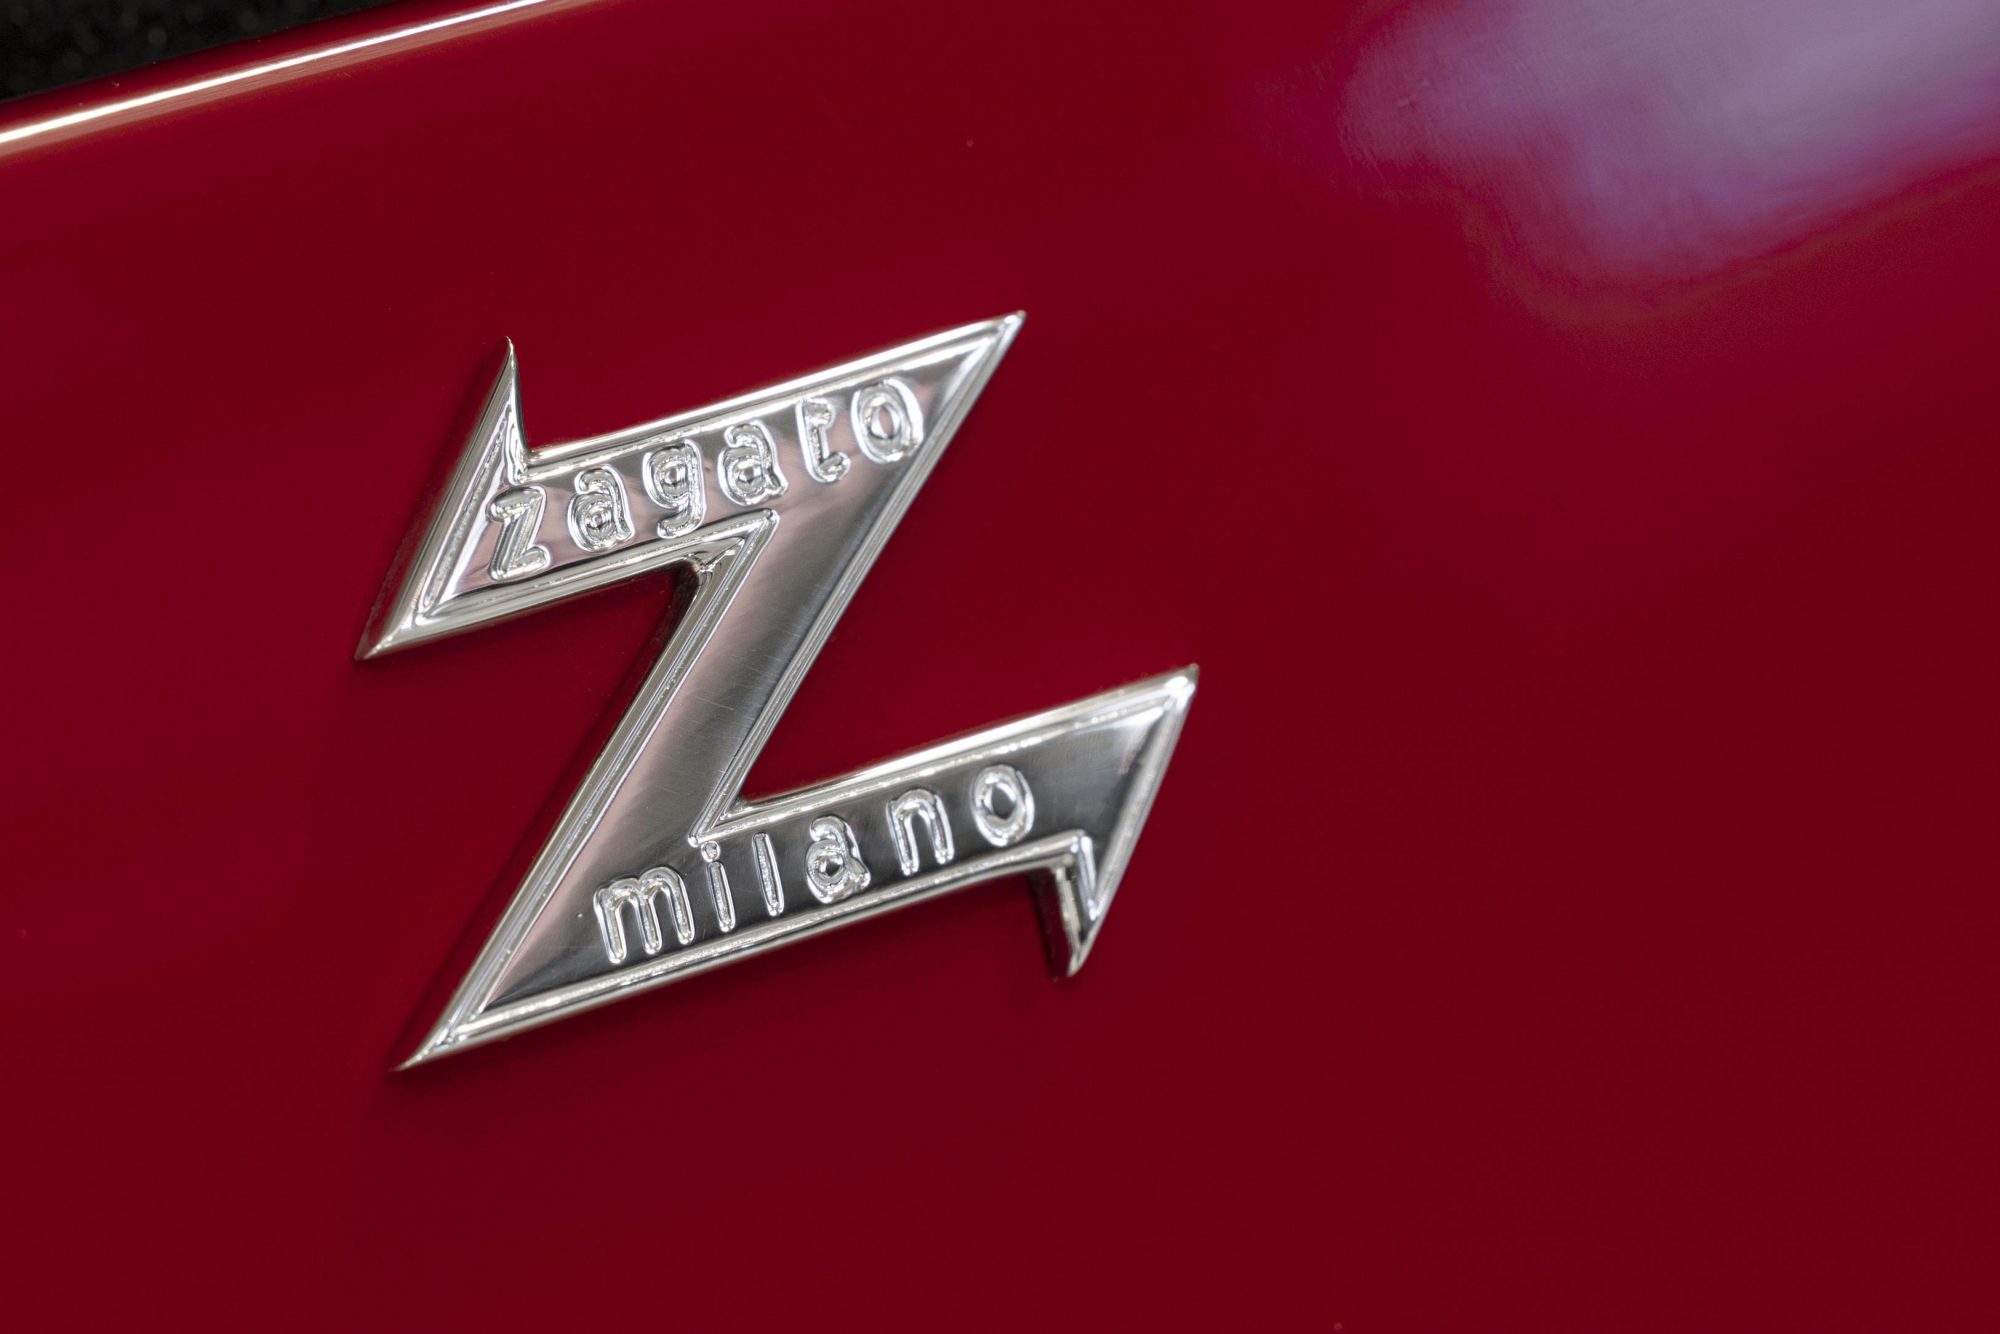 Aston Martin, Aston martin DB4 Zagato, DB4, Zagato, Zagato Continuation, Zagato emblem